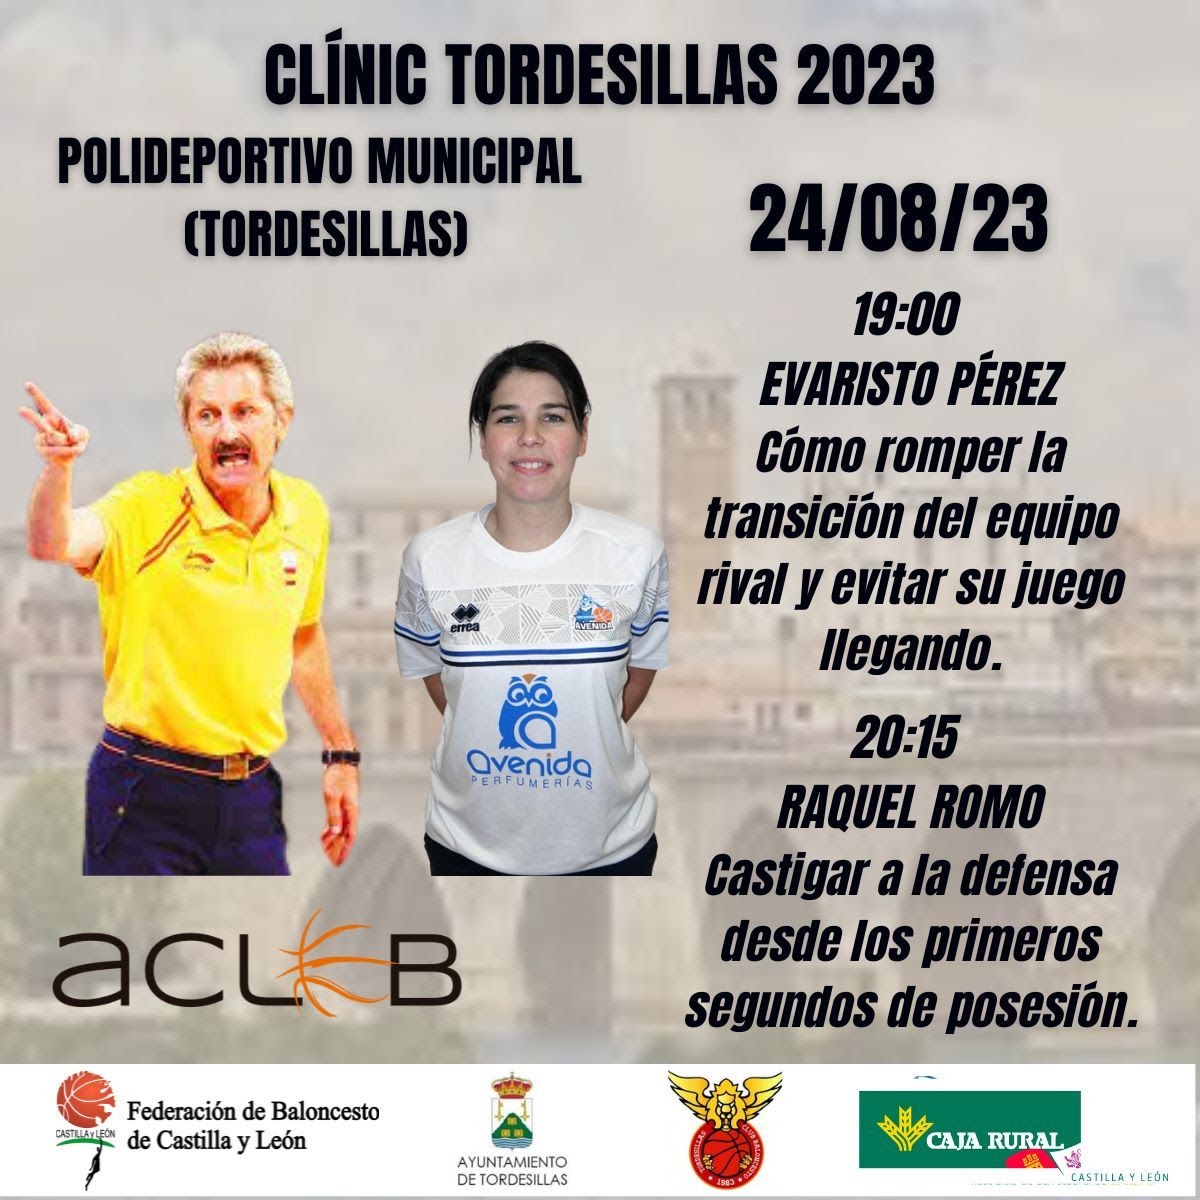  Clínic Tordesillas 2023